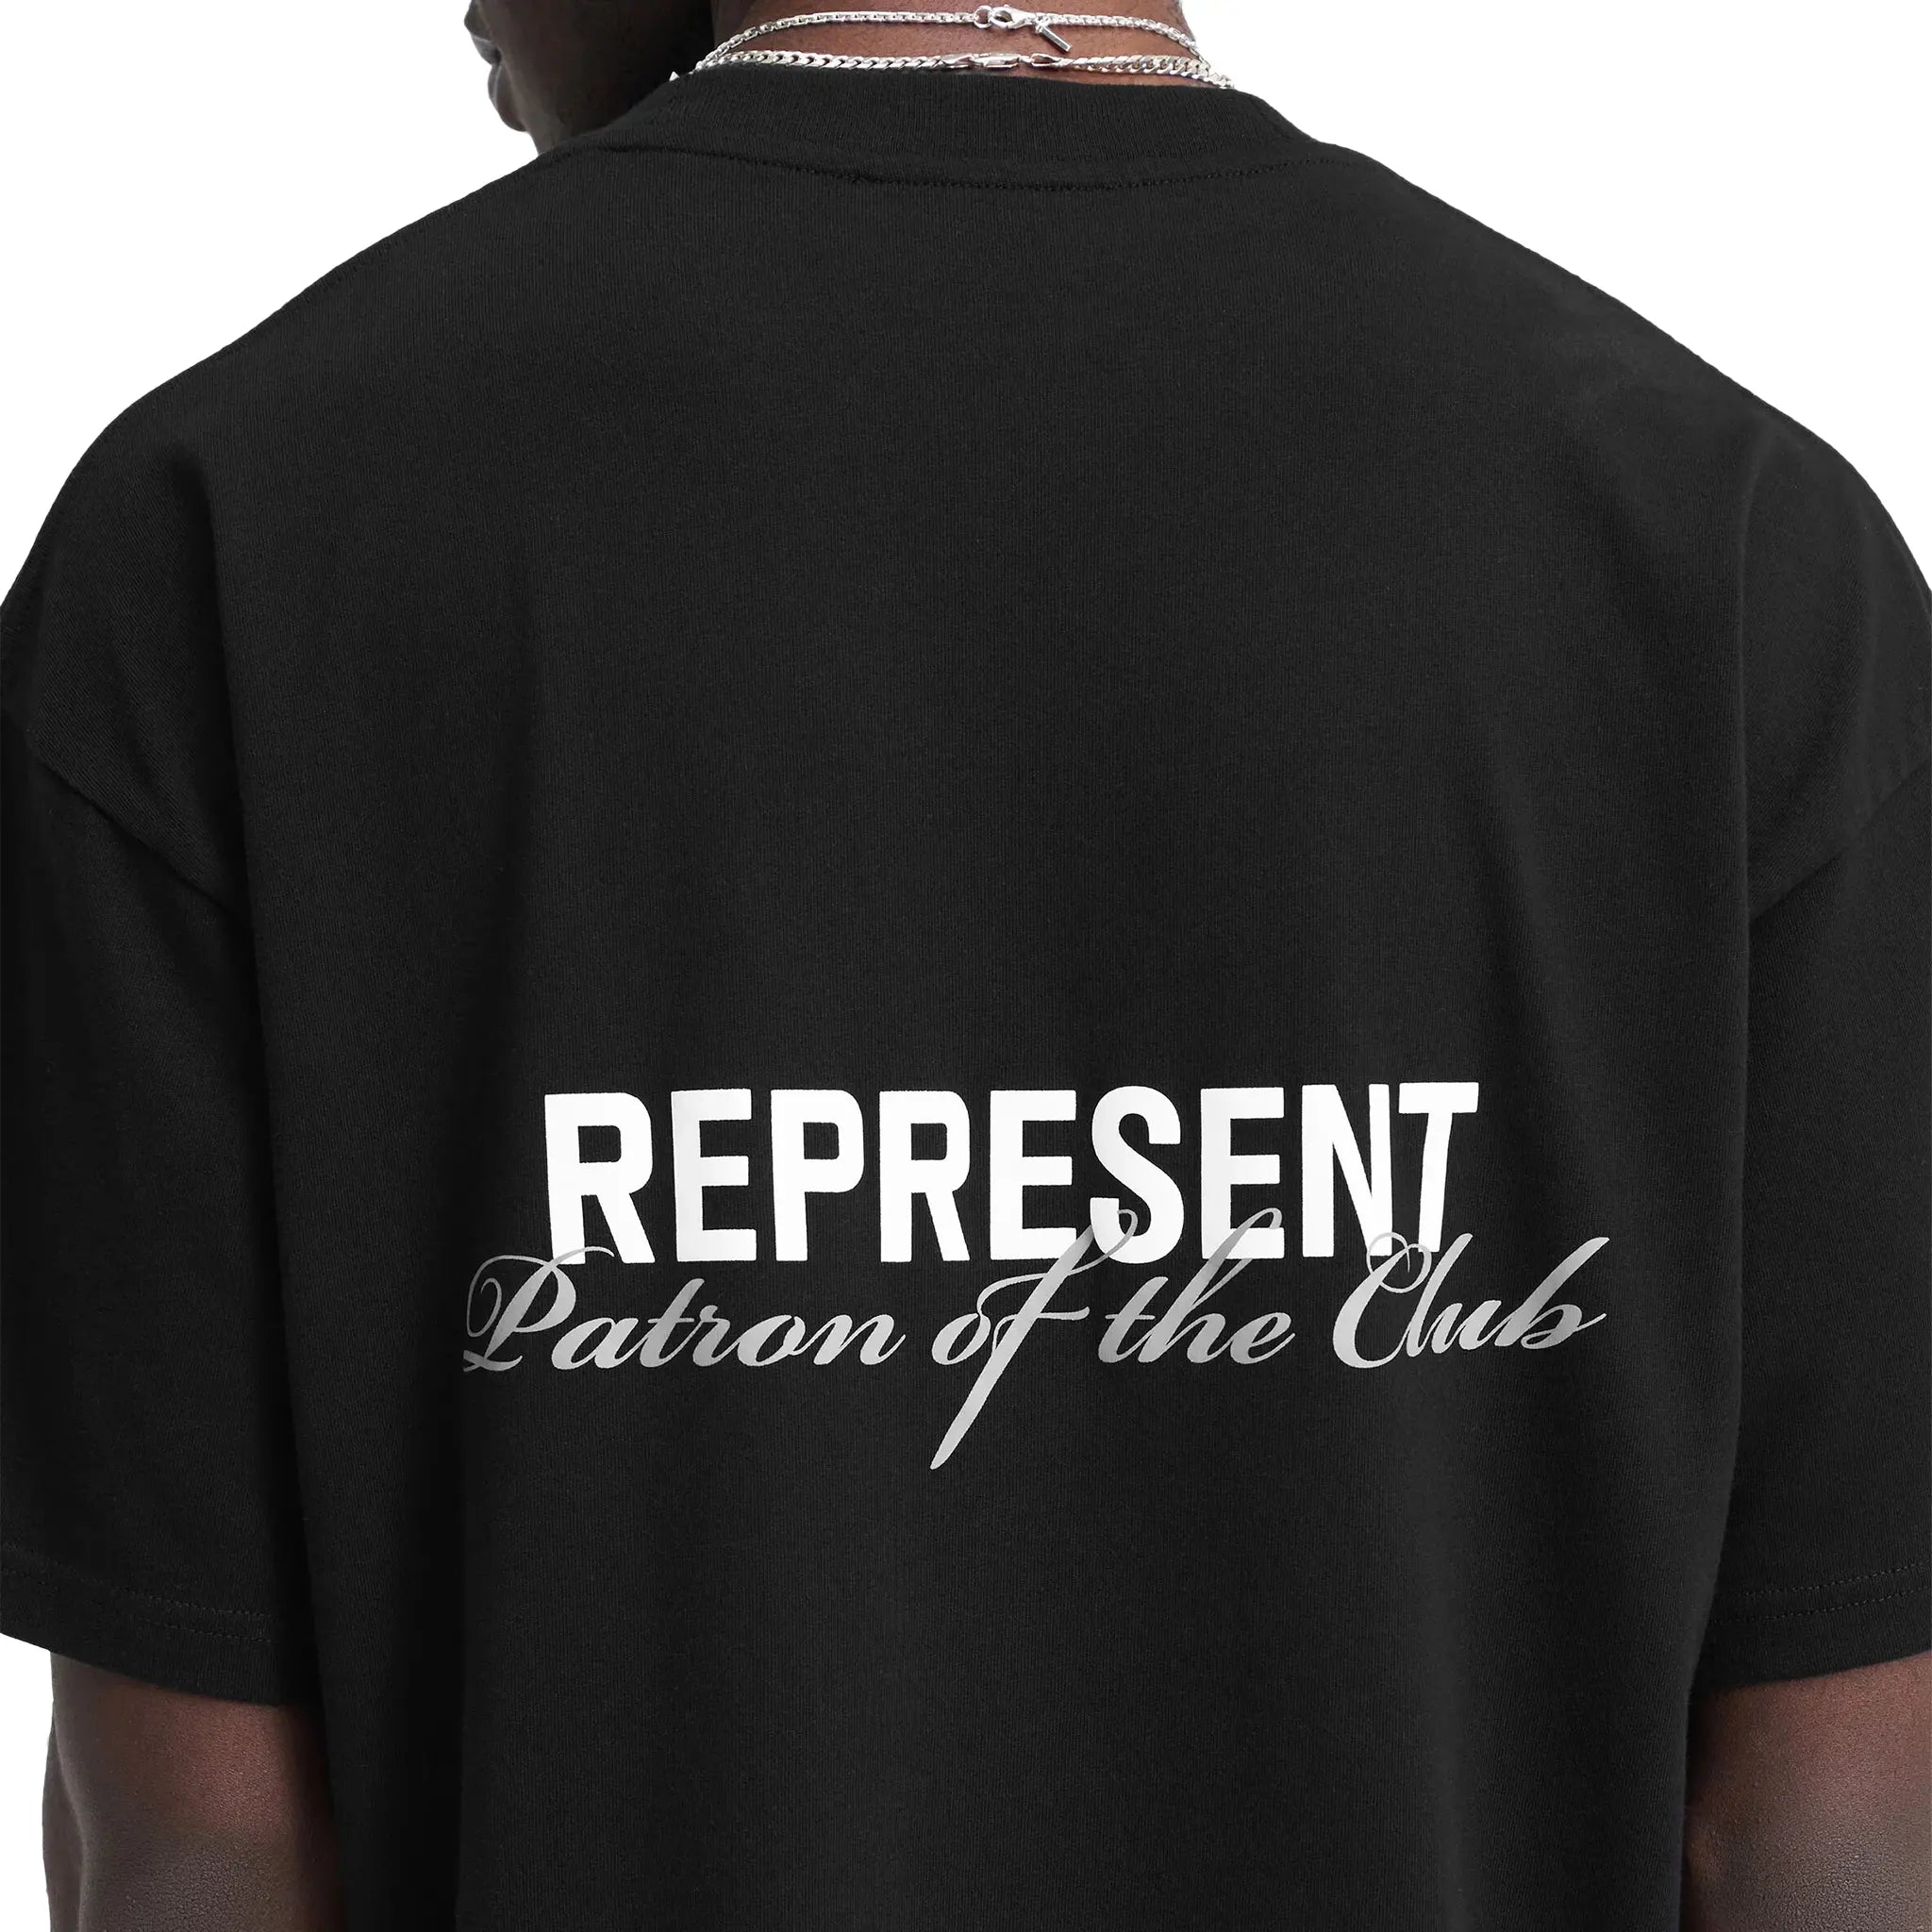 Back Detail view of Represent Patron Club Black T Shirt MLM4274-001